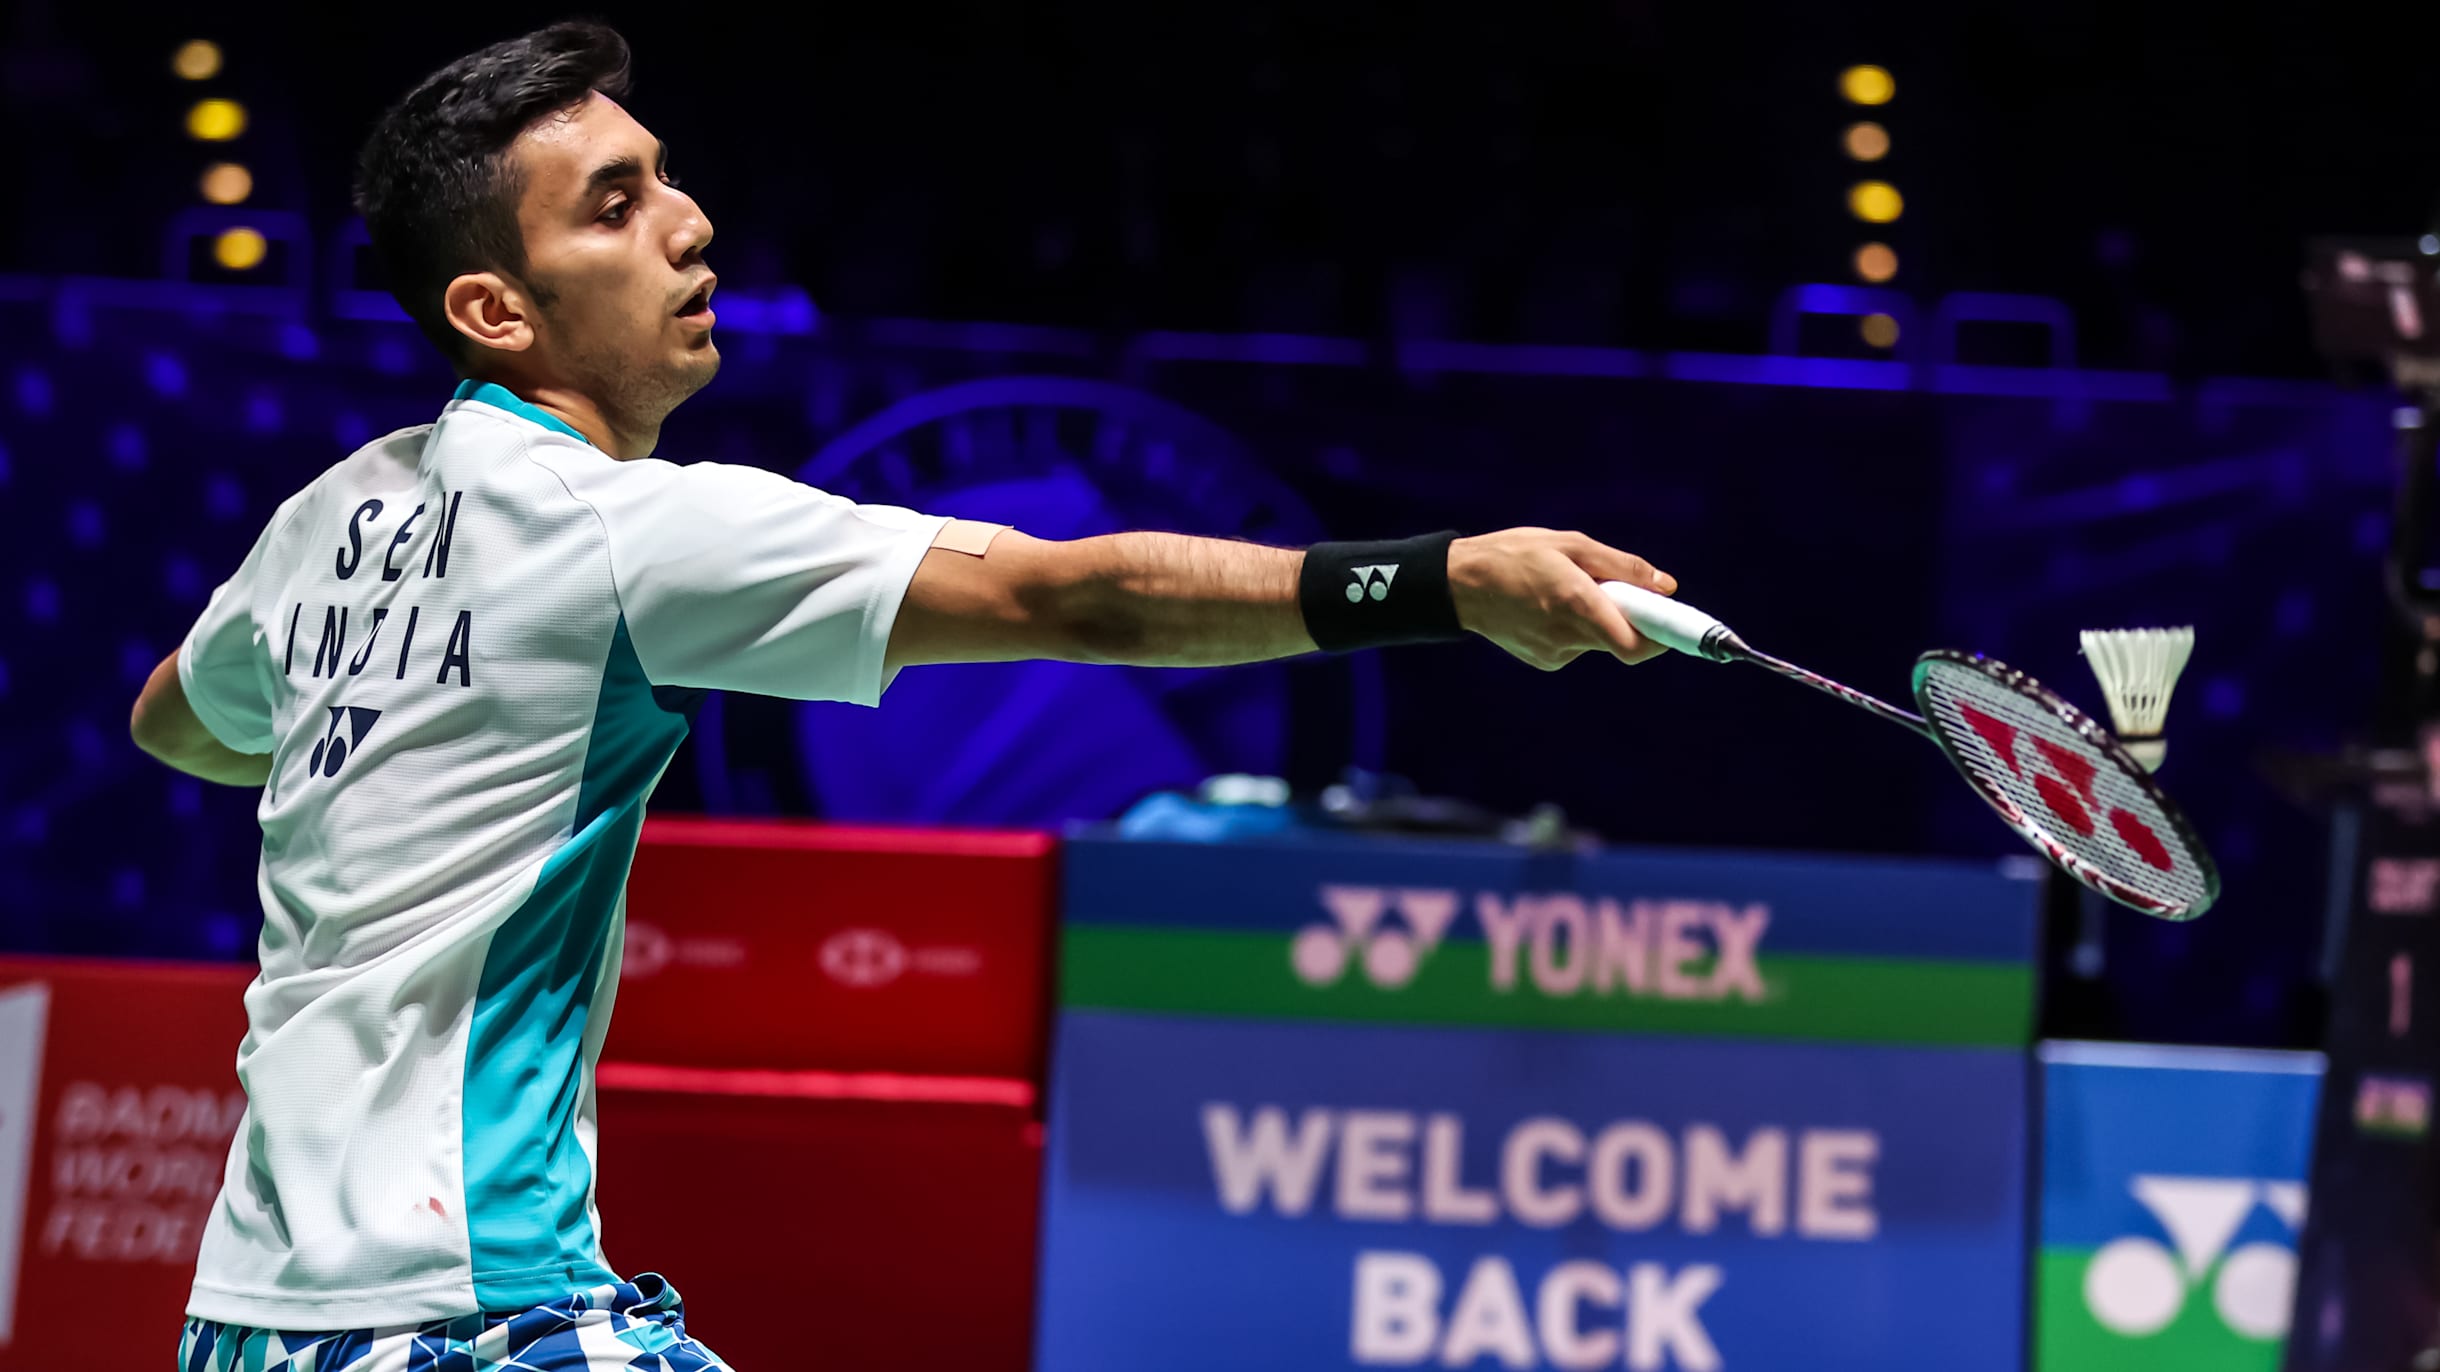 Denmark Open 2022 badminton: Lakshya Sen in quarter-finals get results